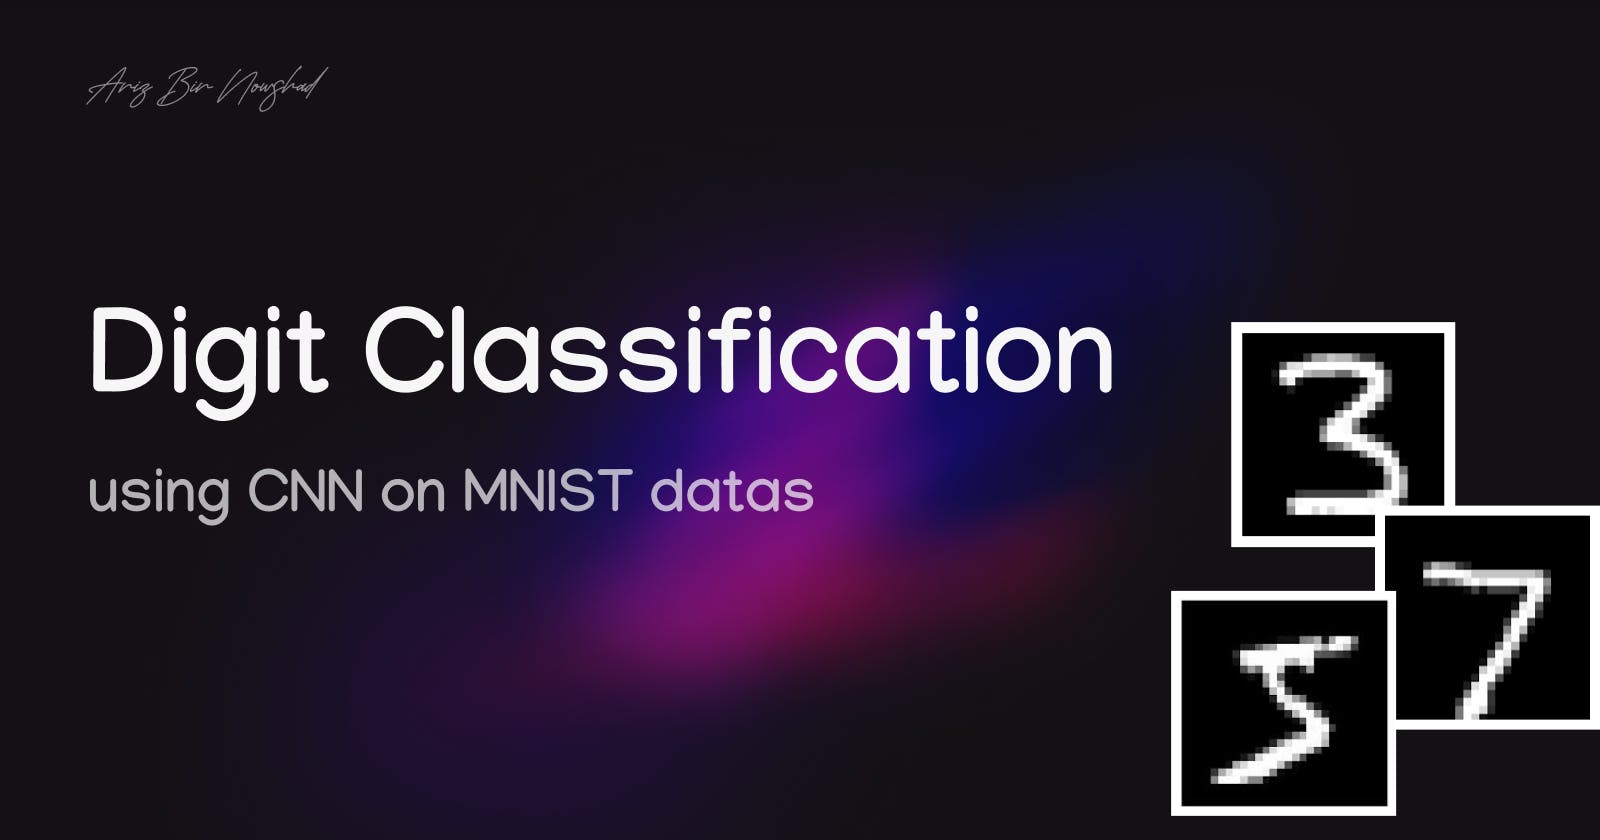 Digit Classifiication using CNN on MNIST dataset